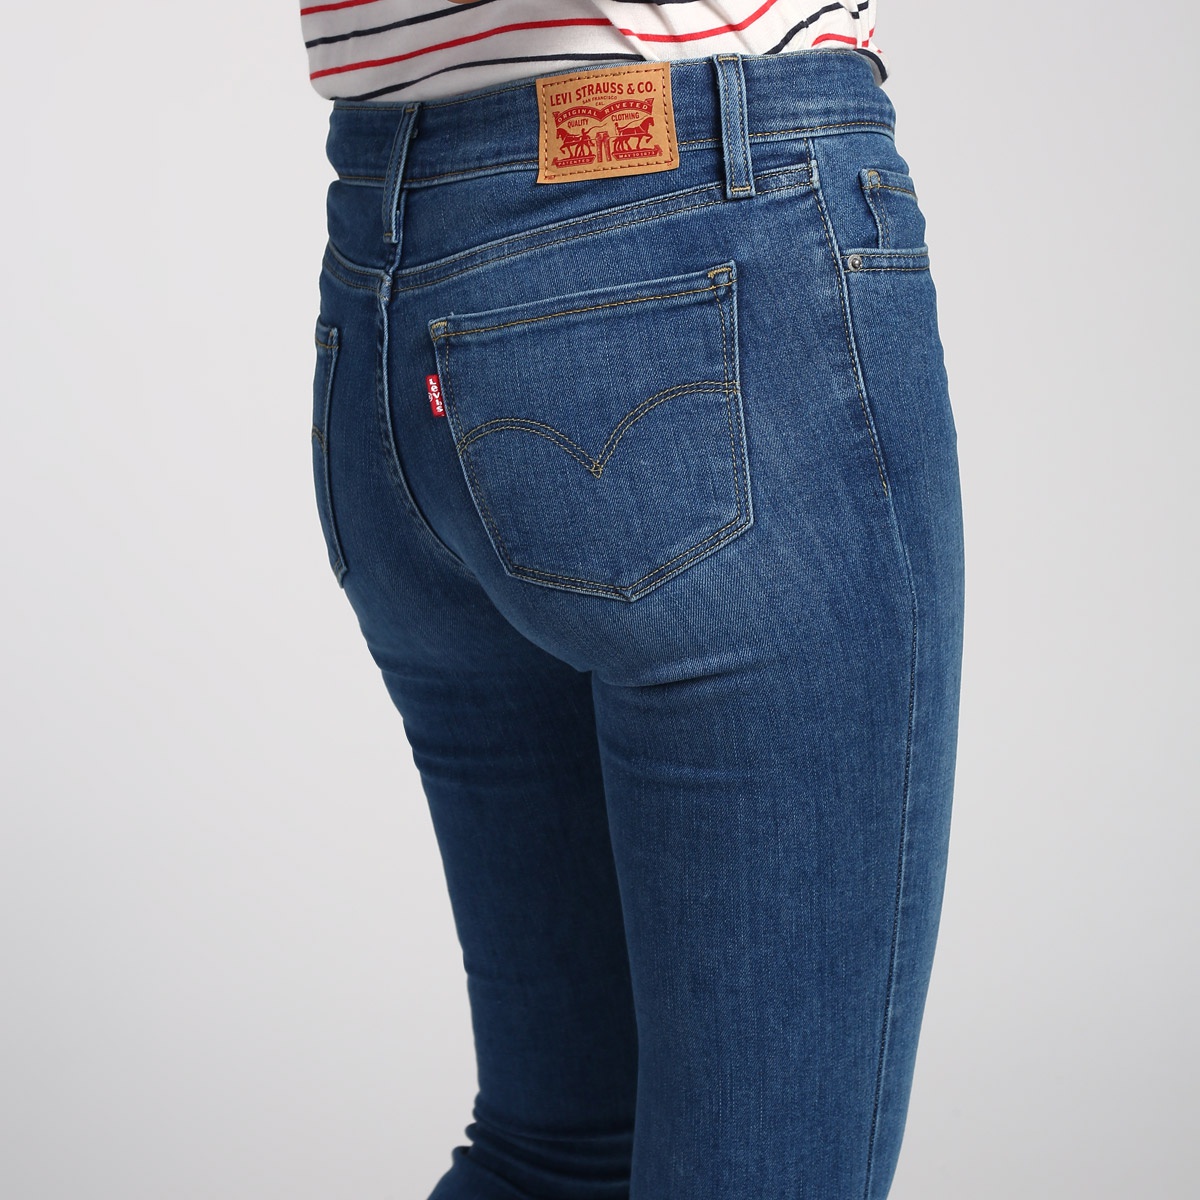 Levi's 711 Skinny Women's Jeans 